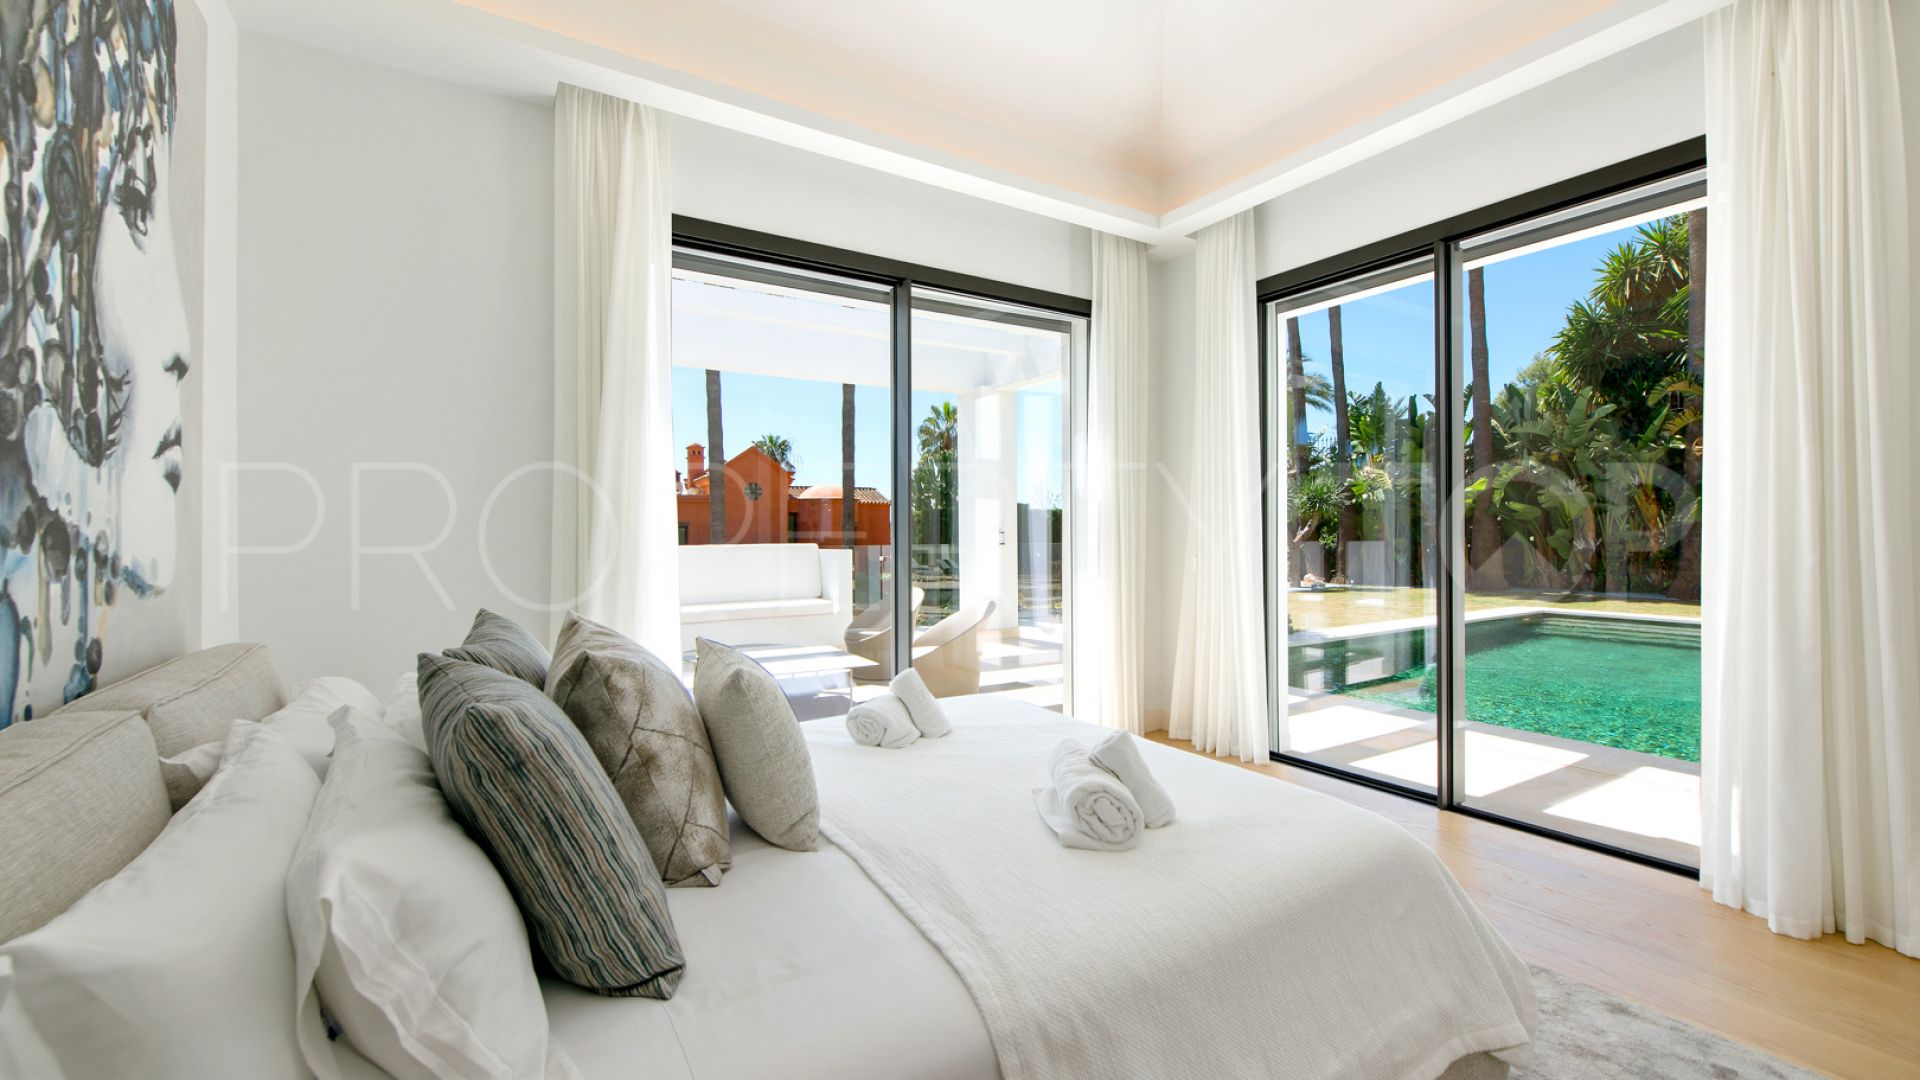 4 bedrooms villa in Sierra Blanca for sale